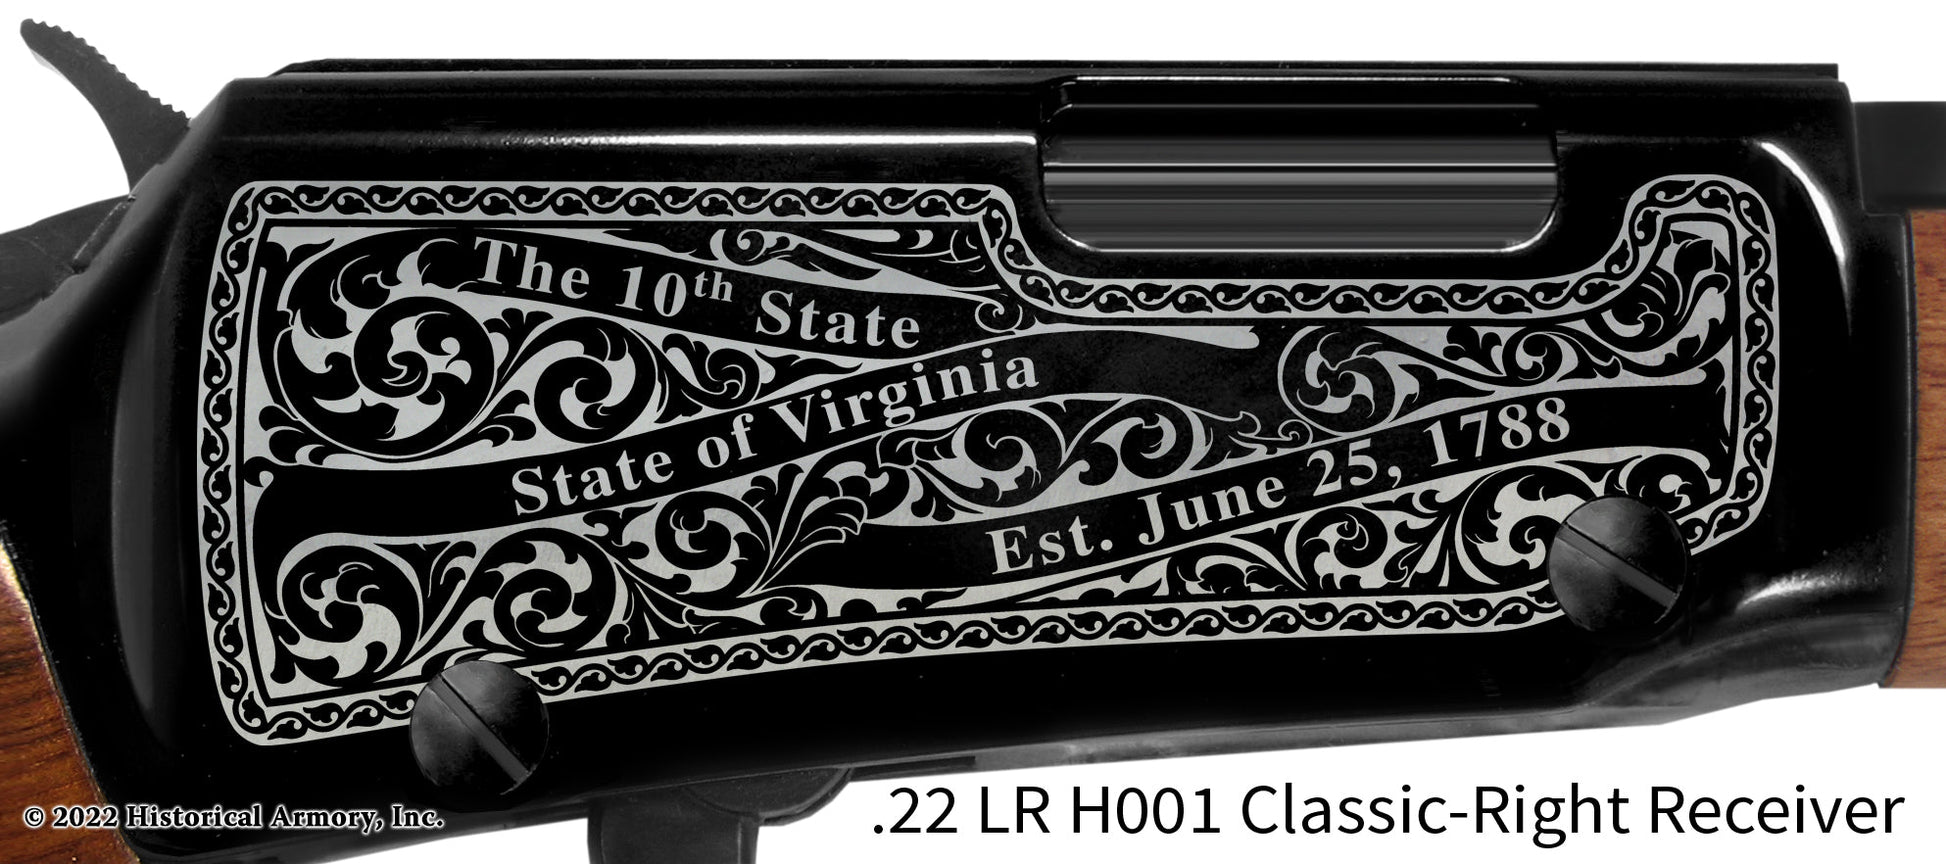 Washington County Virginia Engraved Henry H001 Rifle